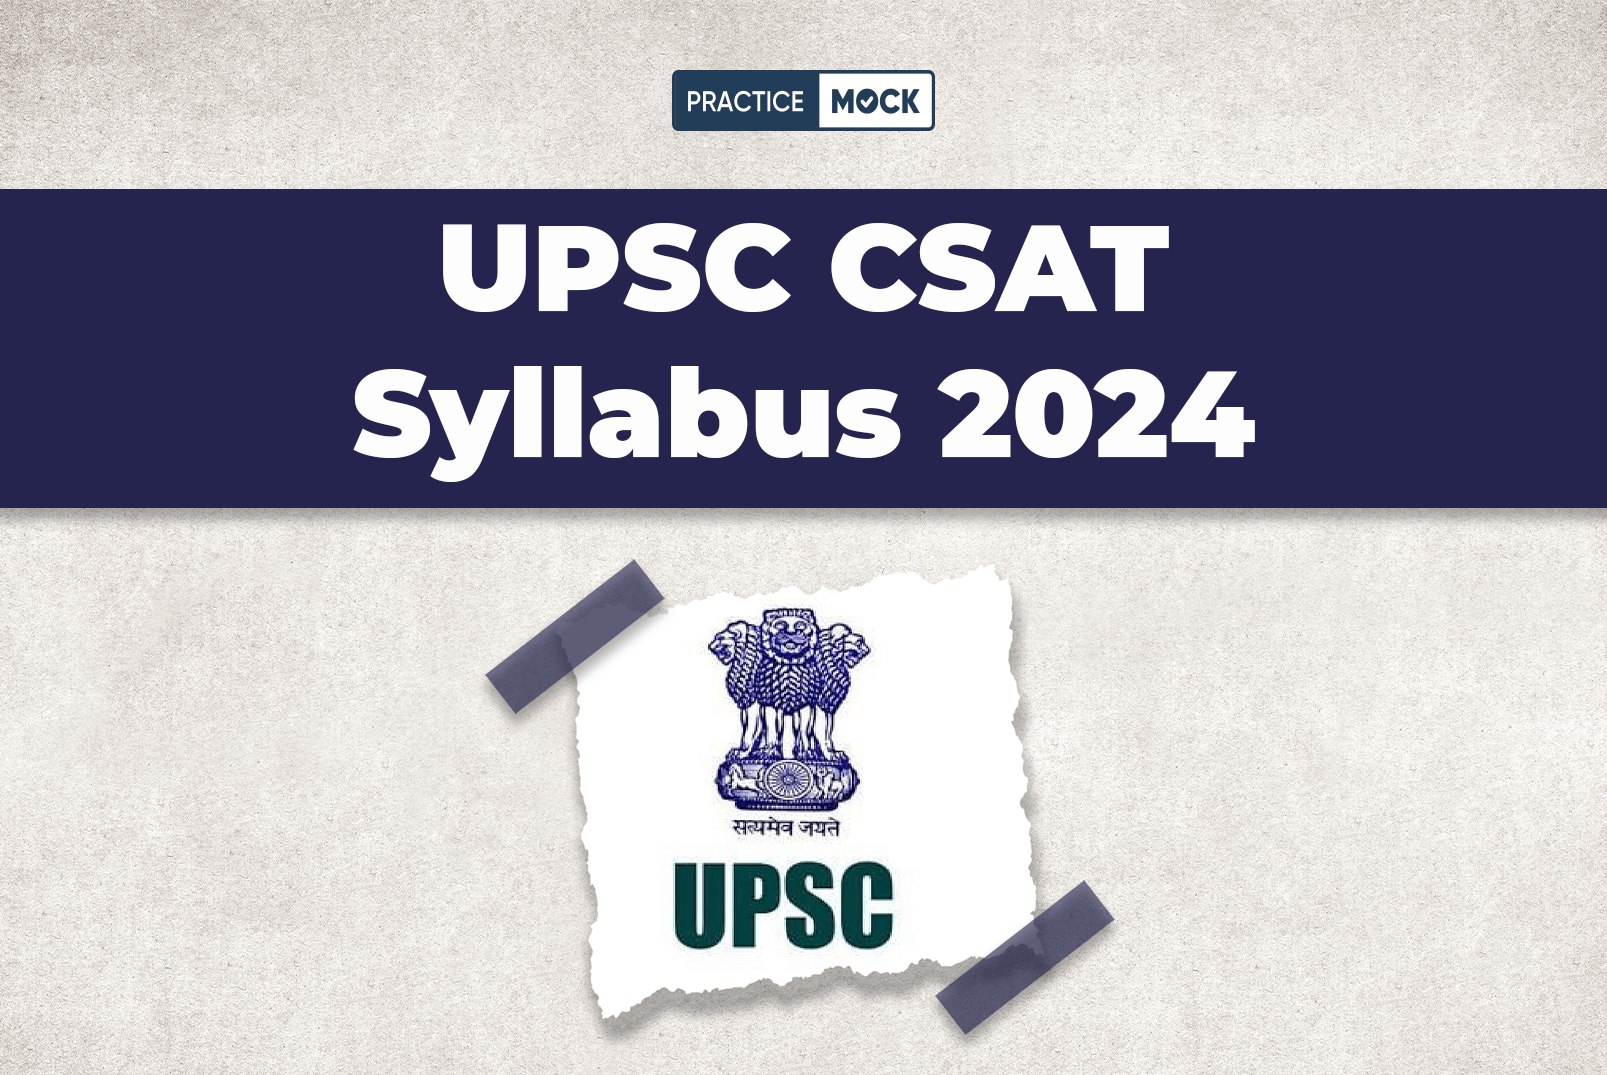 UPSC CSAT Syllabus 2024